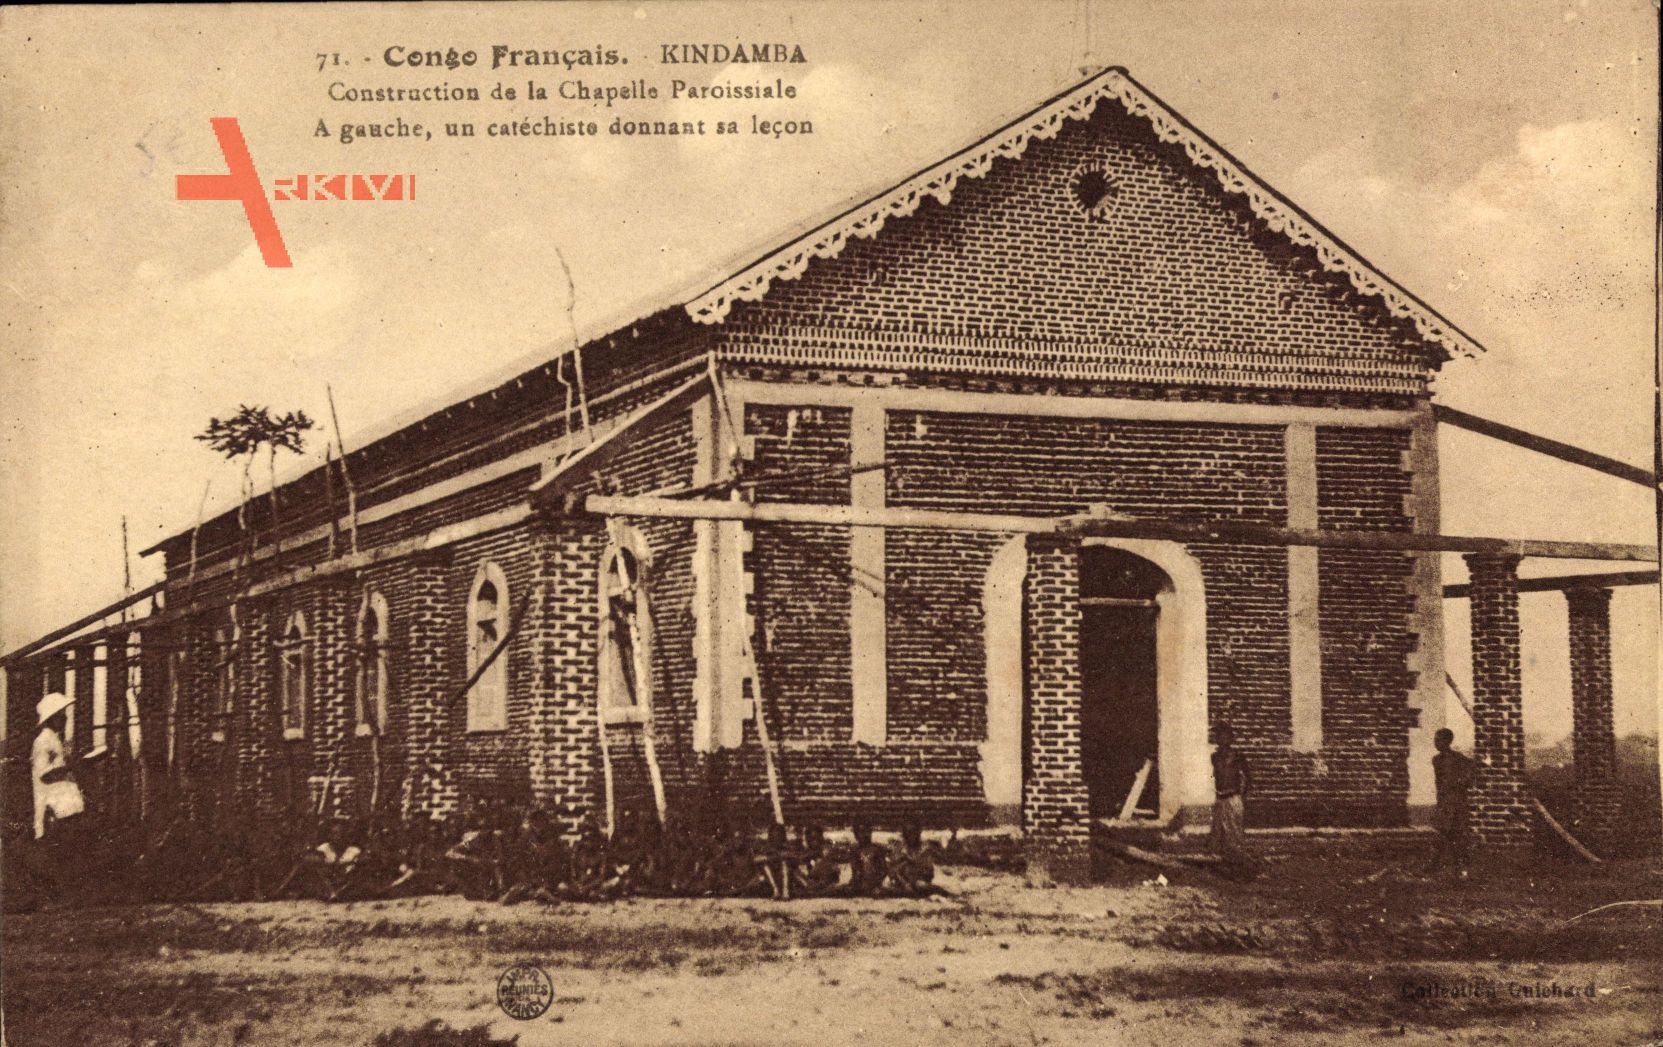 Kindamba Französisch Kongo, Chapelle Paroissiale, Construction